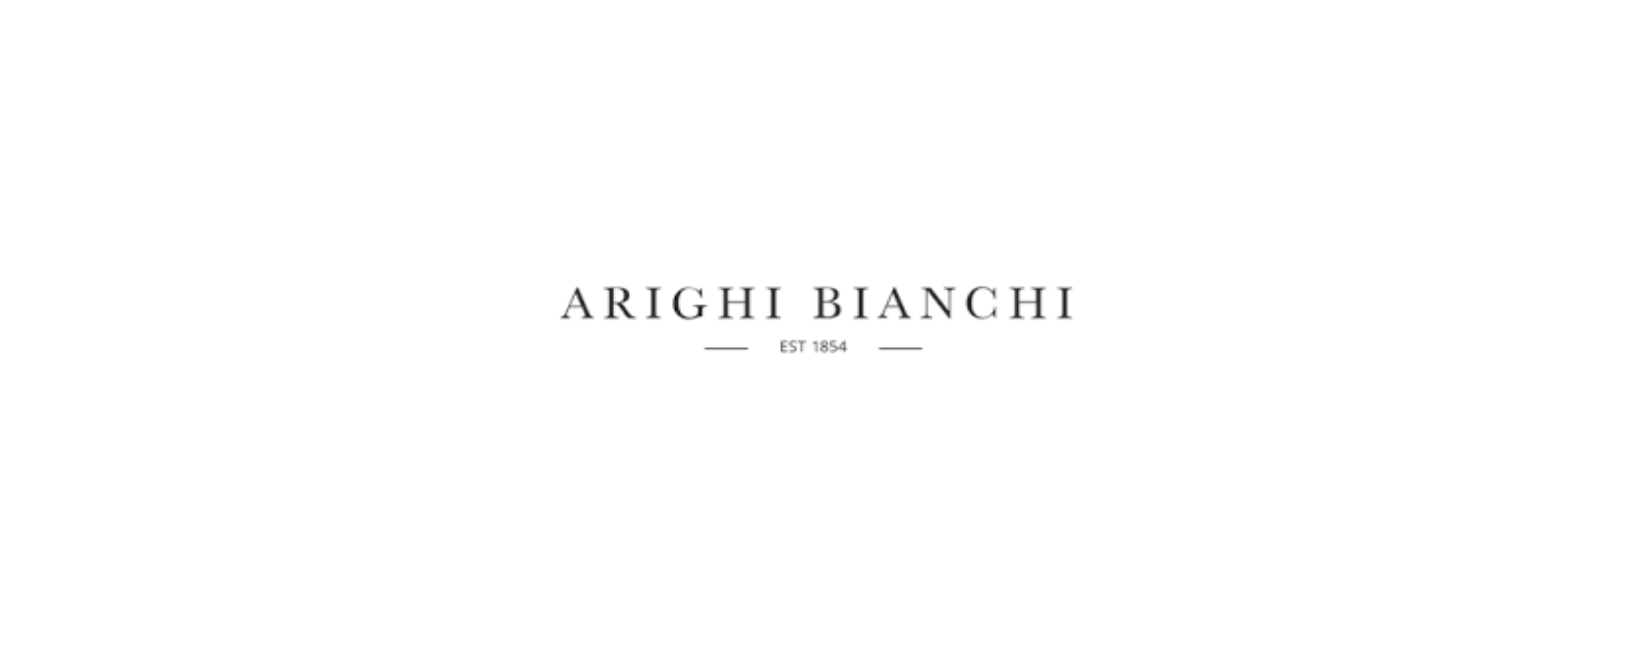 Arighi Bianchi Discount Code 2022